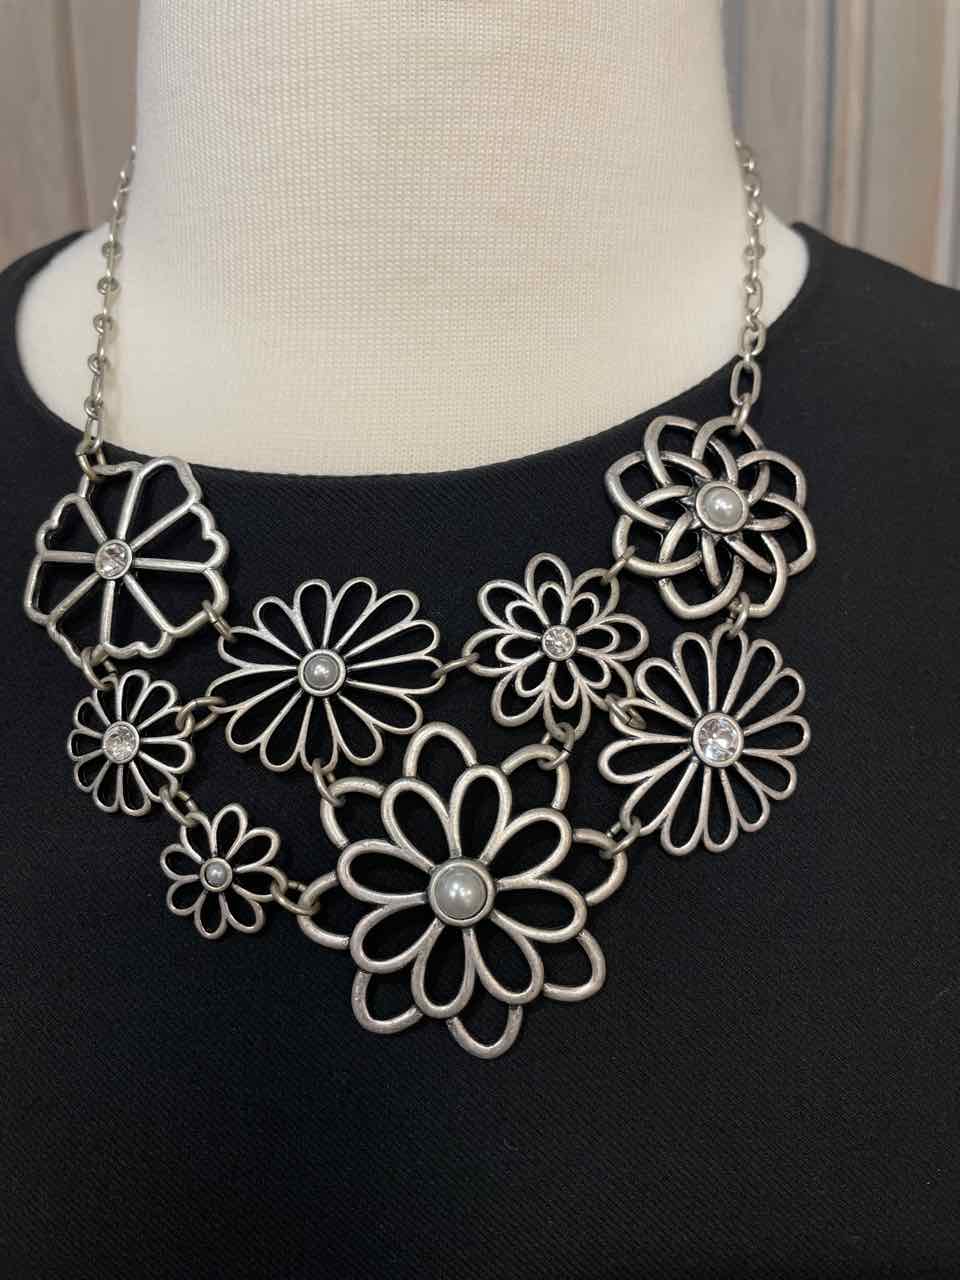 Jewelry - Lia Sophia Flower Necklace